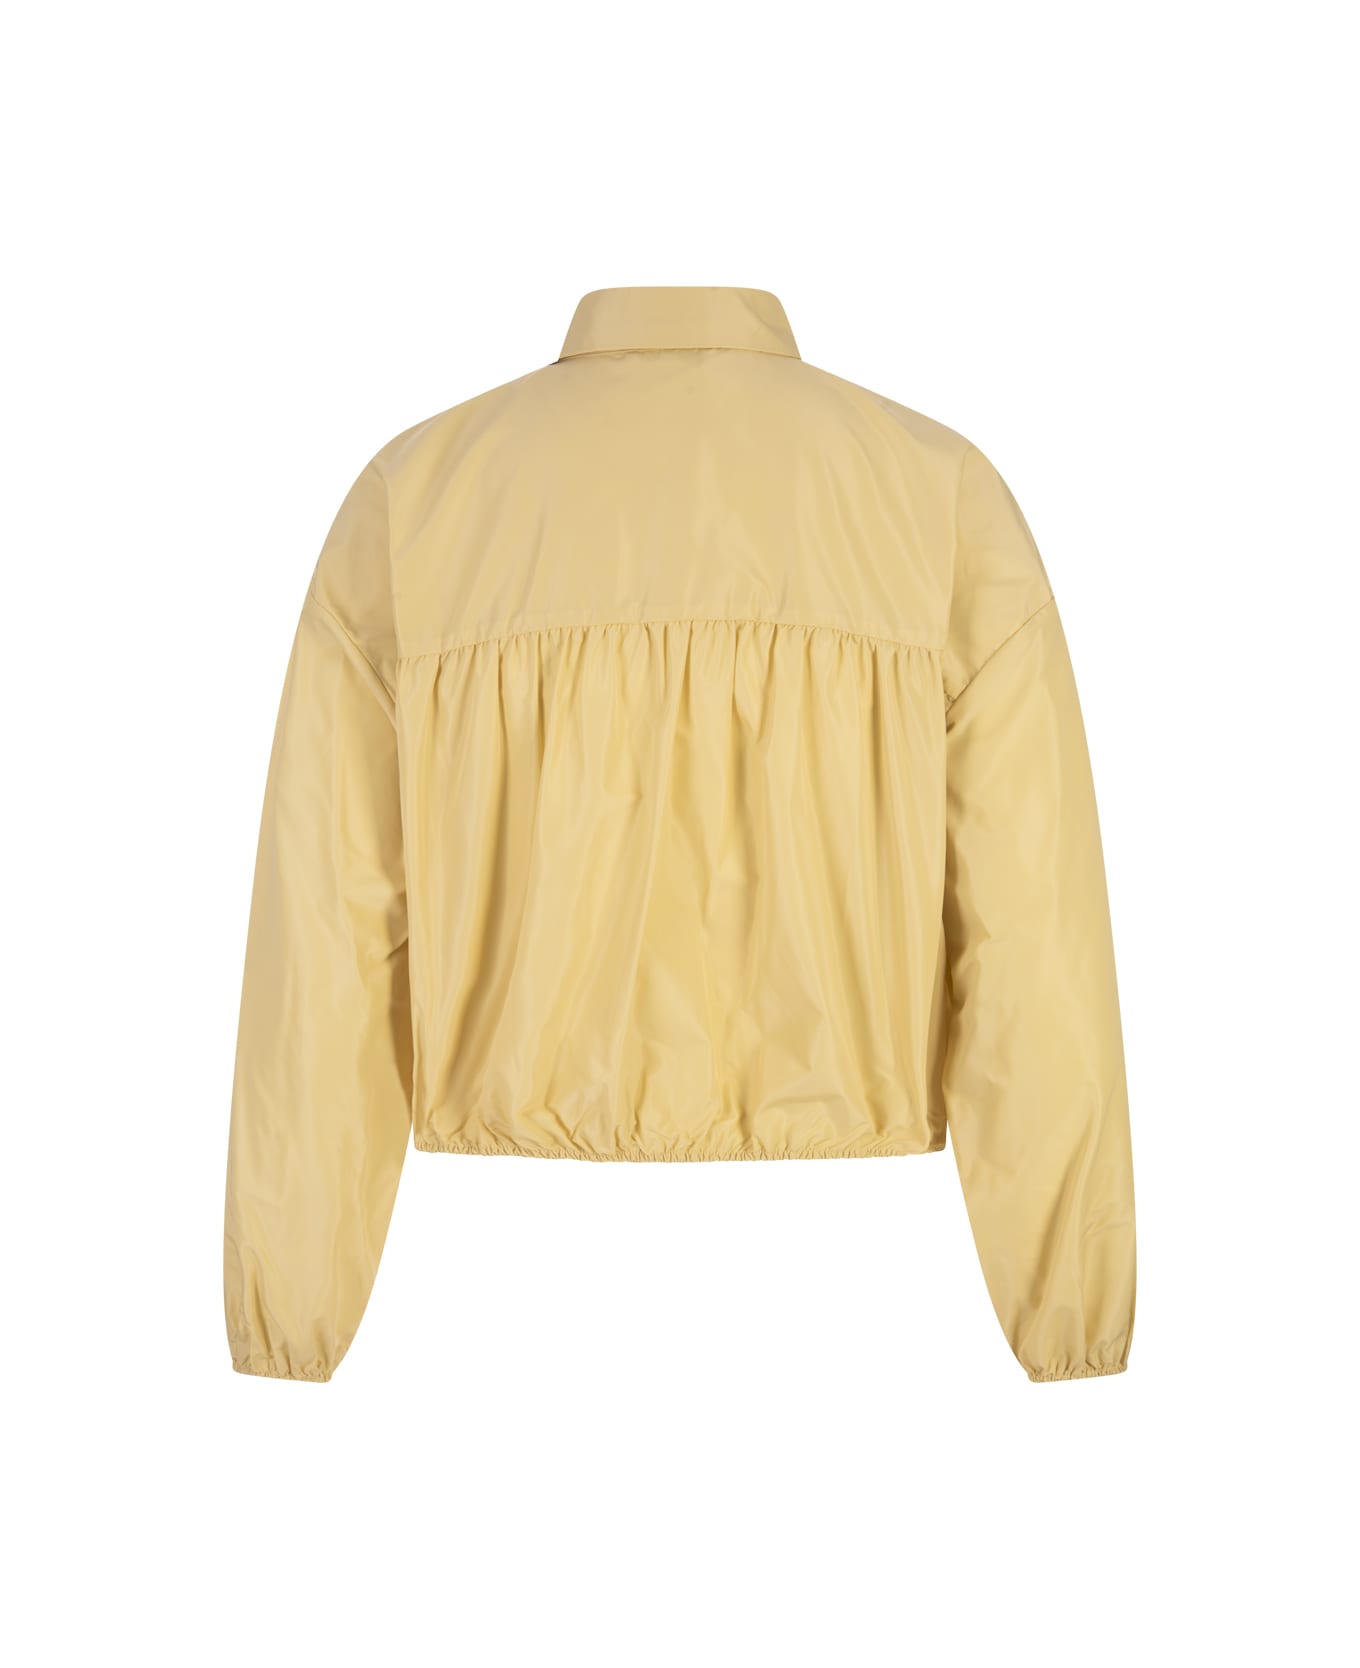 Aspesi Yellow Technical Polyester Taffeta Shirt - Yellow ジャケット